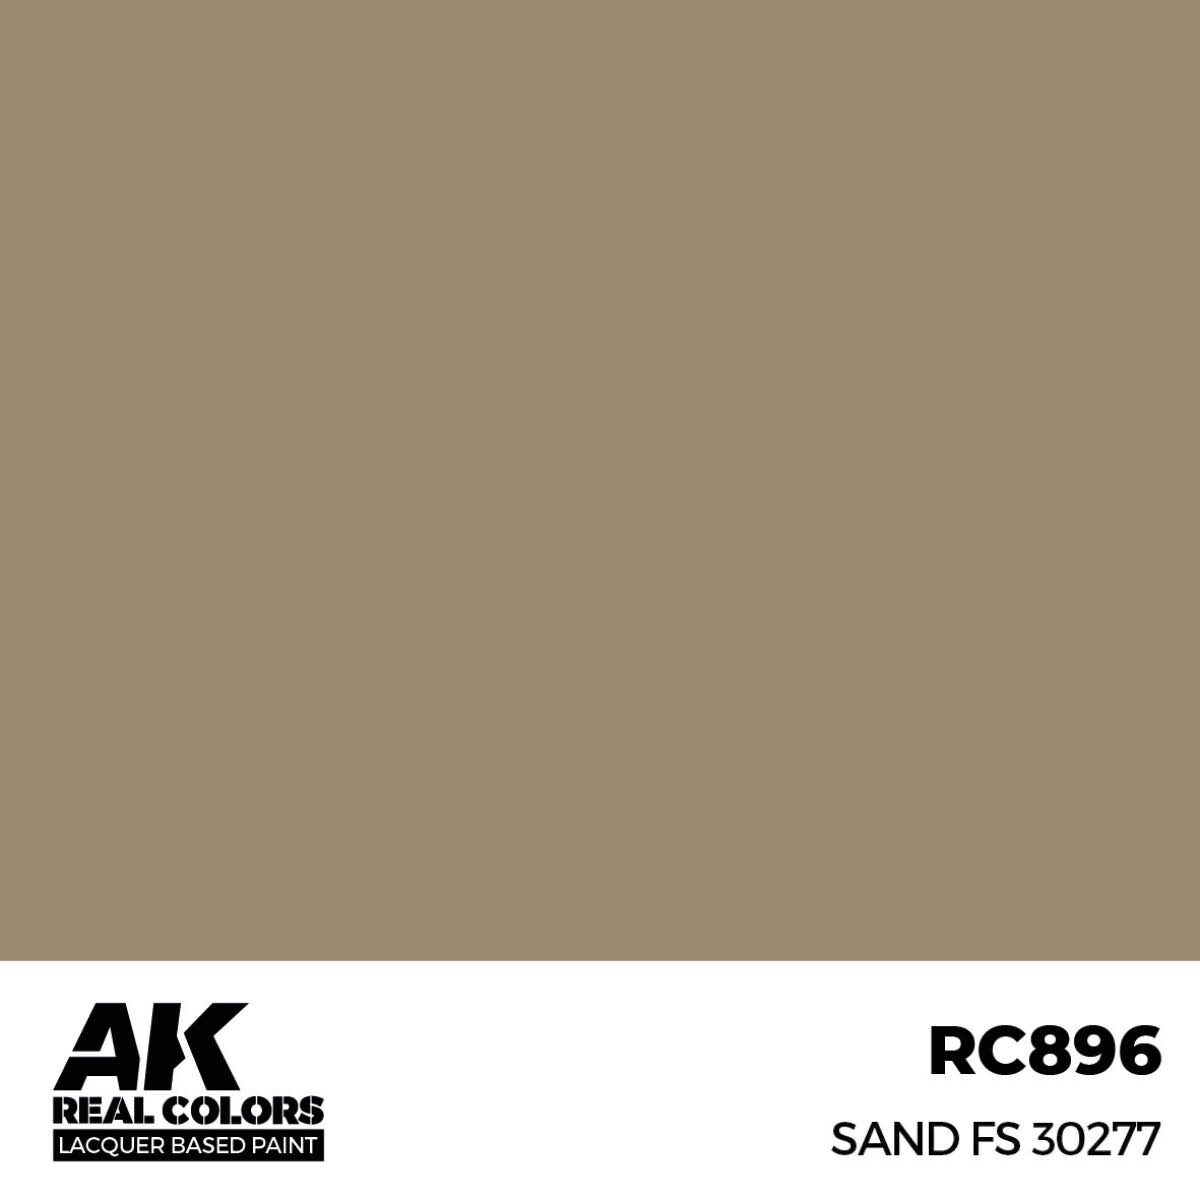 AK RC896 Real Colors Sand FS 30277 17 ml.